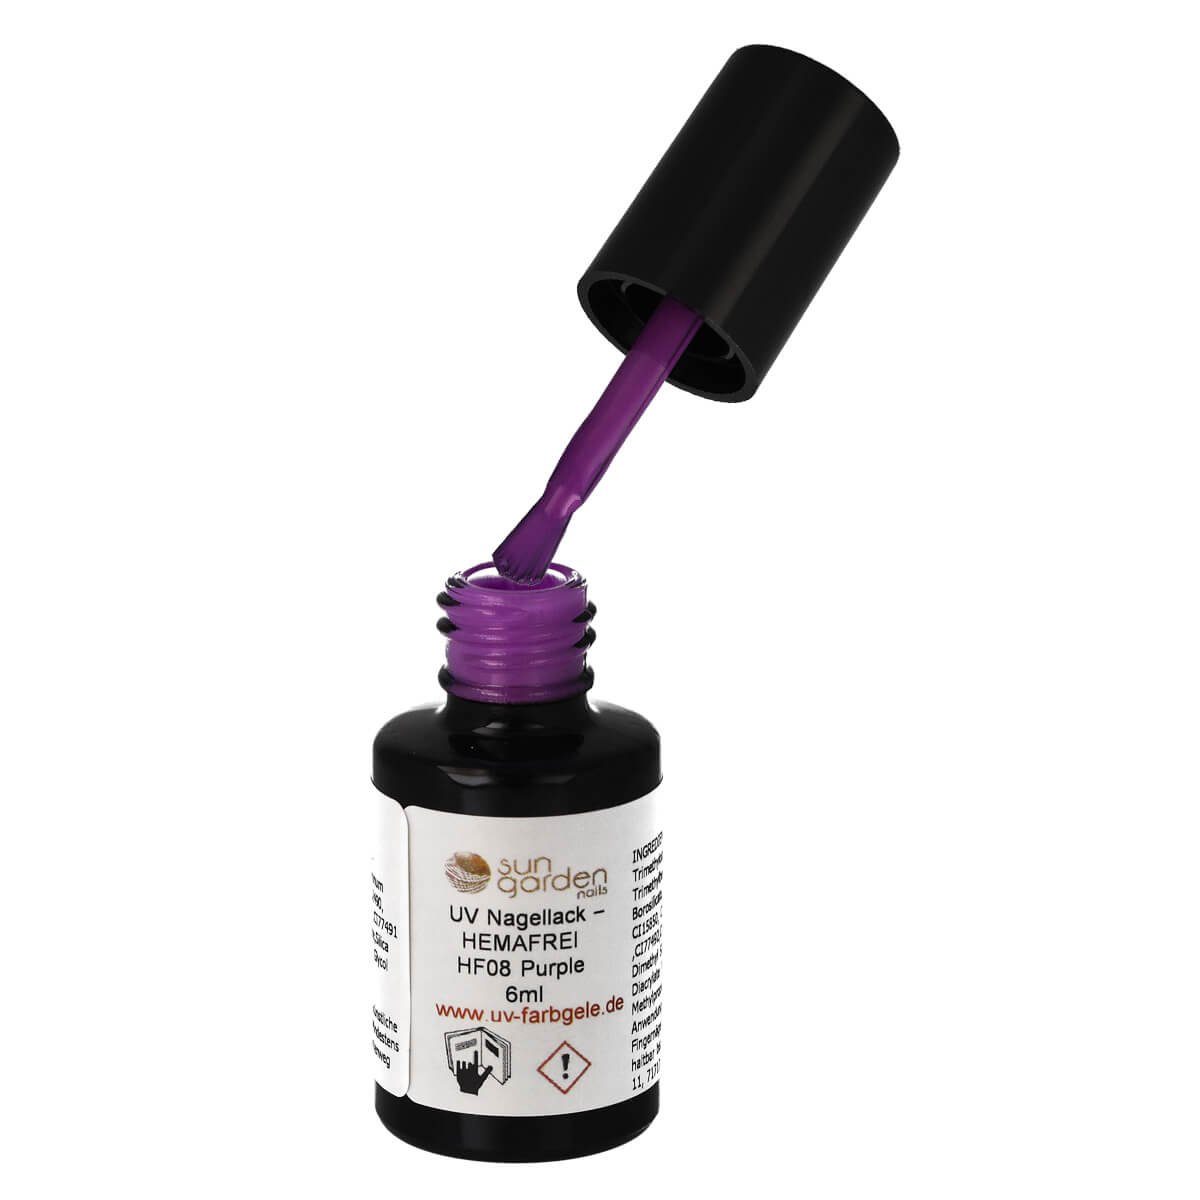 Sun Garden Nails – UV - Purple Nagellack 6ml HF08 Nagellack HEMAFREI